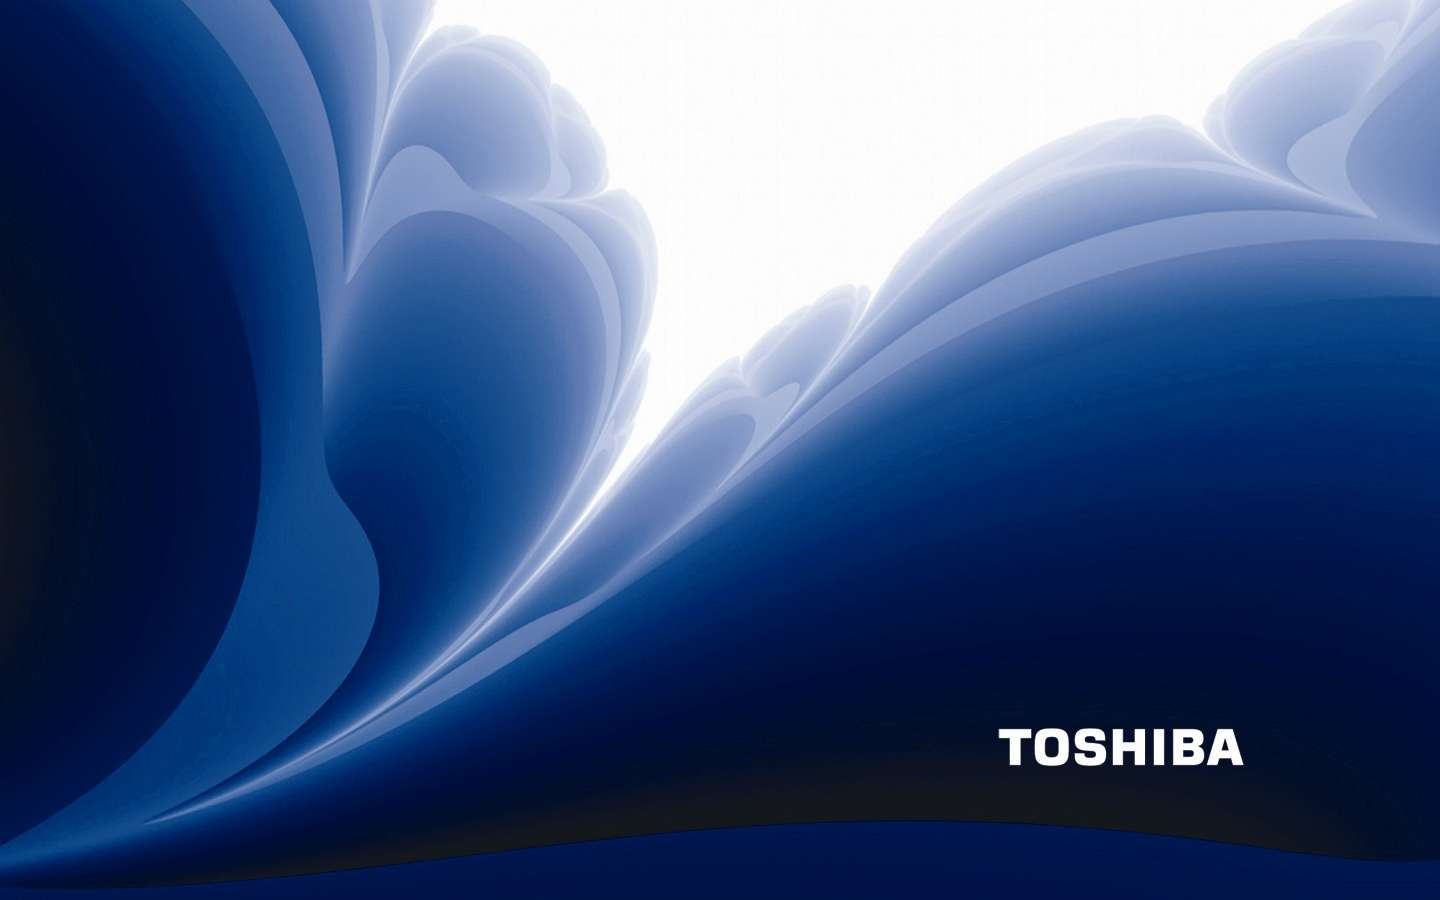 Toshiba Laptop Wallpaper